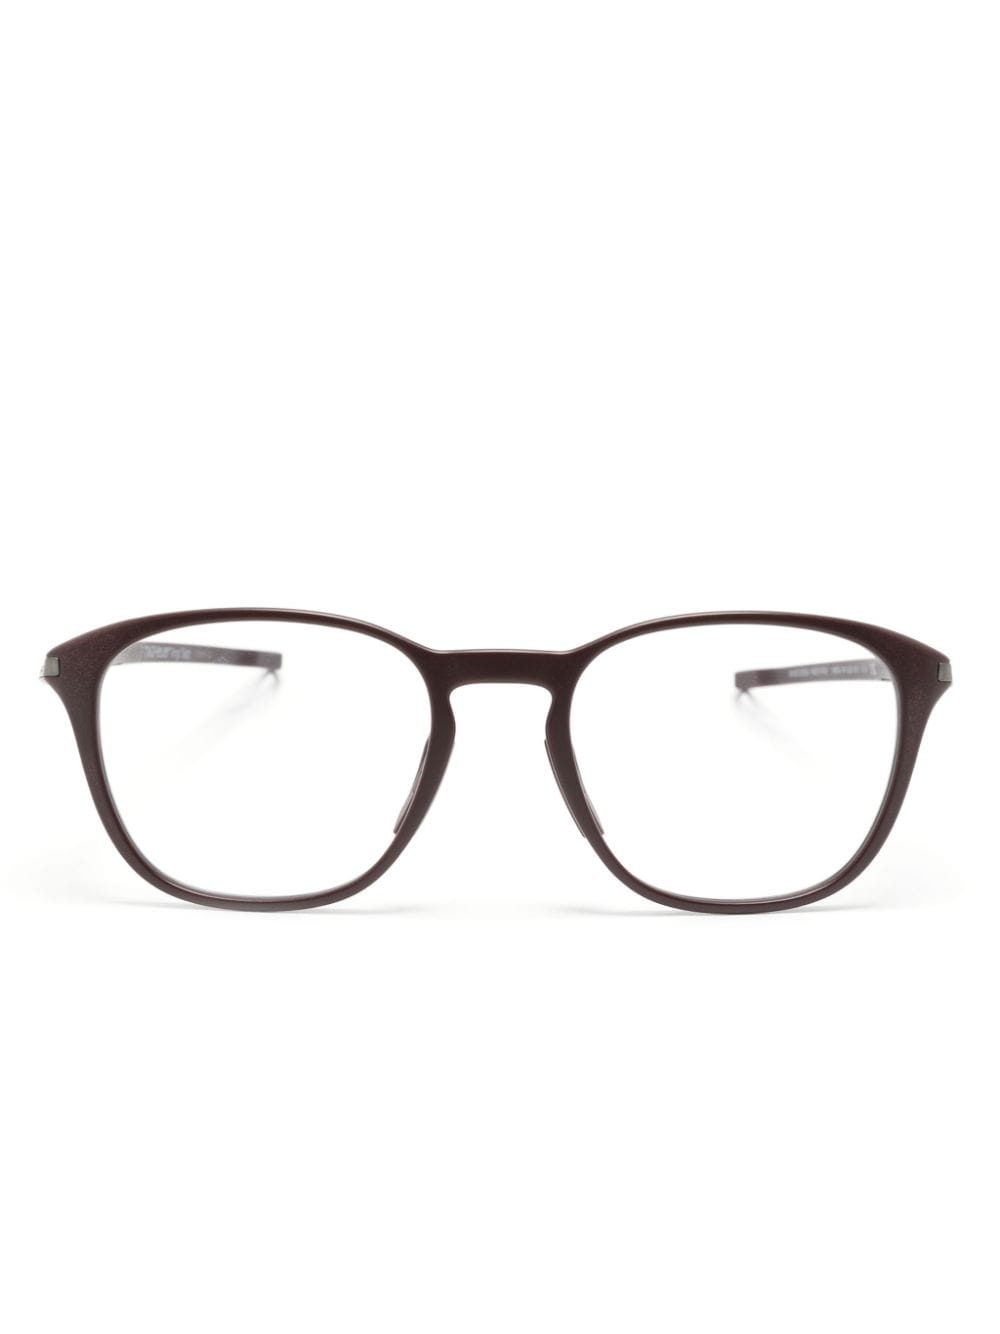 Tag Heuer Square-frame Glasses In Black